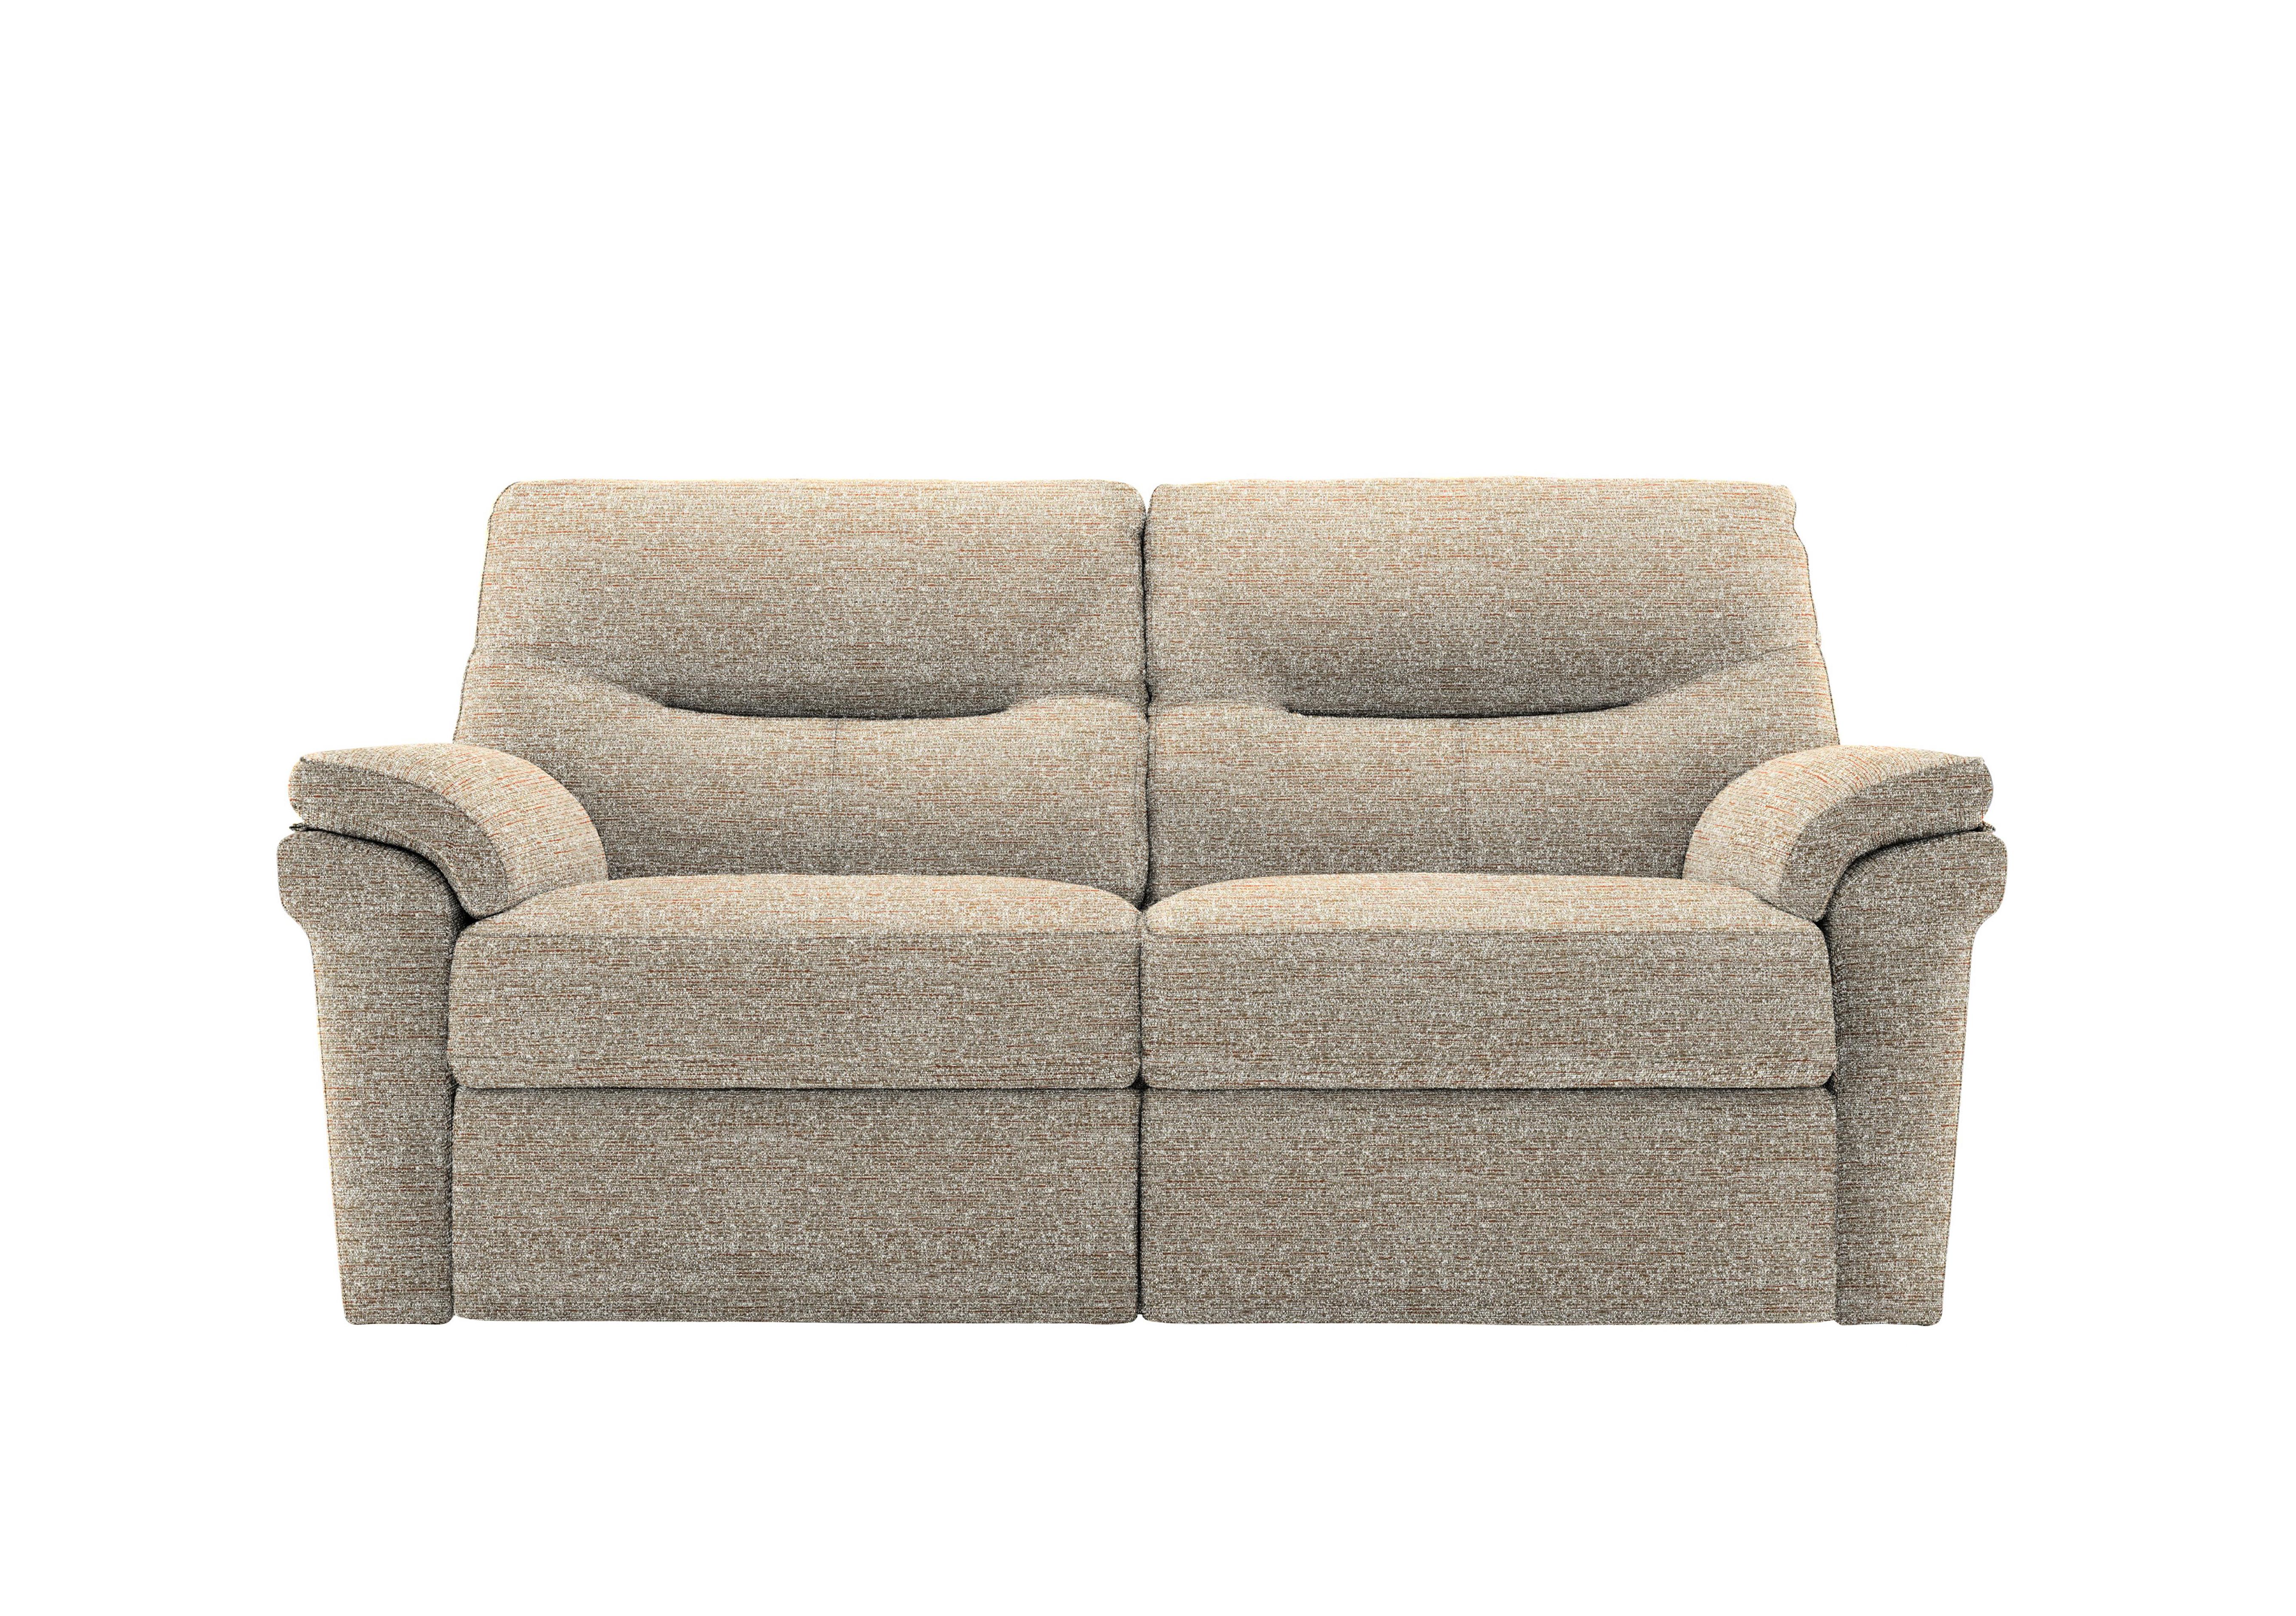 Seattle 2.5 Seater Fabric Sofa in C030 Kampala Beige on Furniture Village